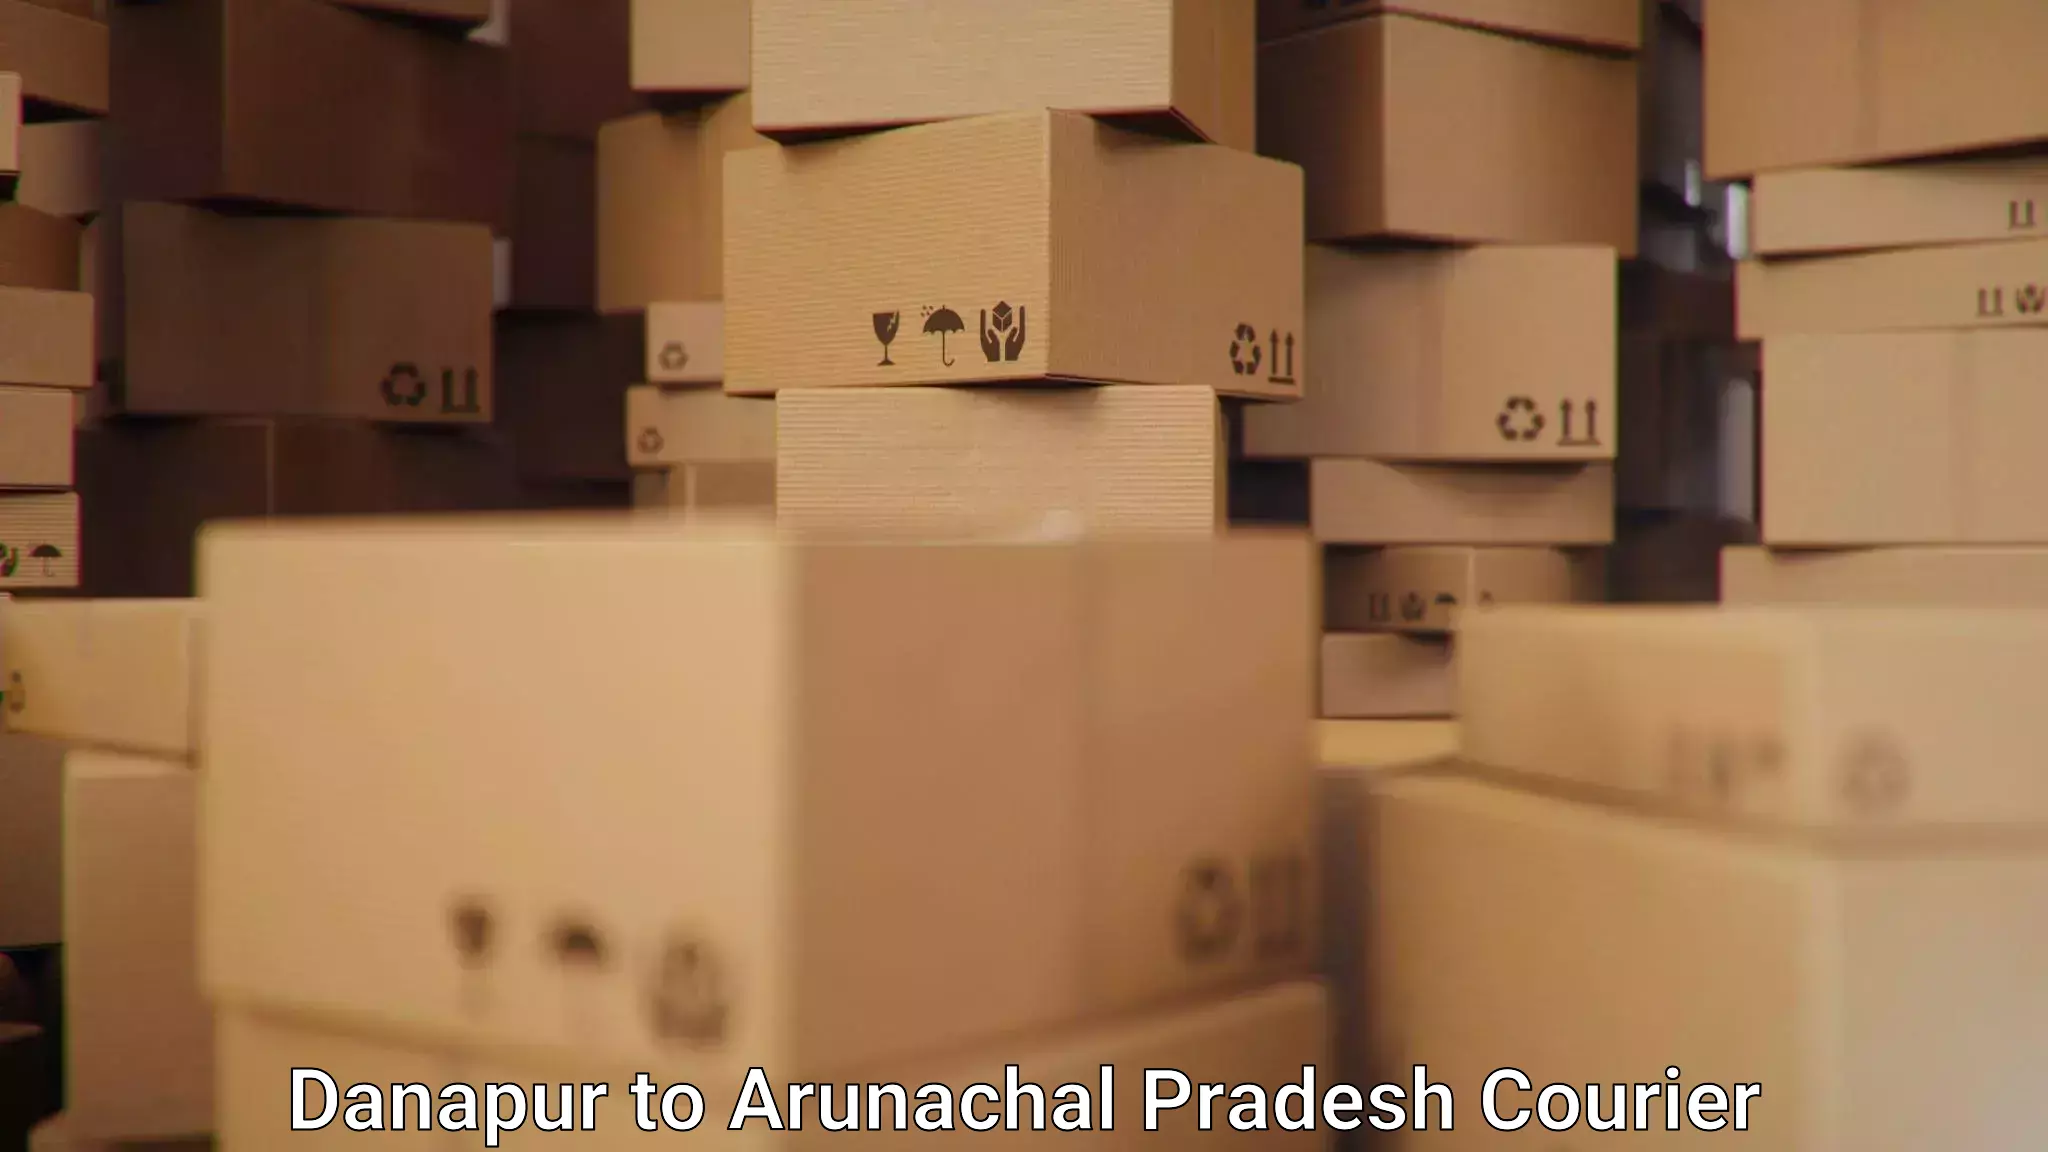 Courier service comparison Danapur to Arunachal Pradesh